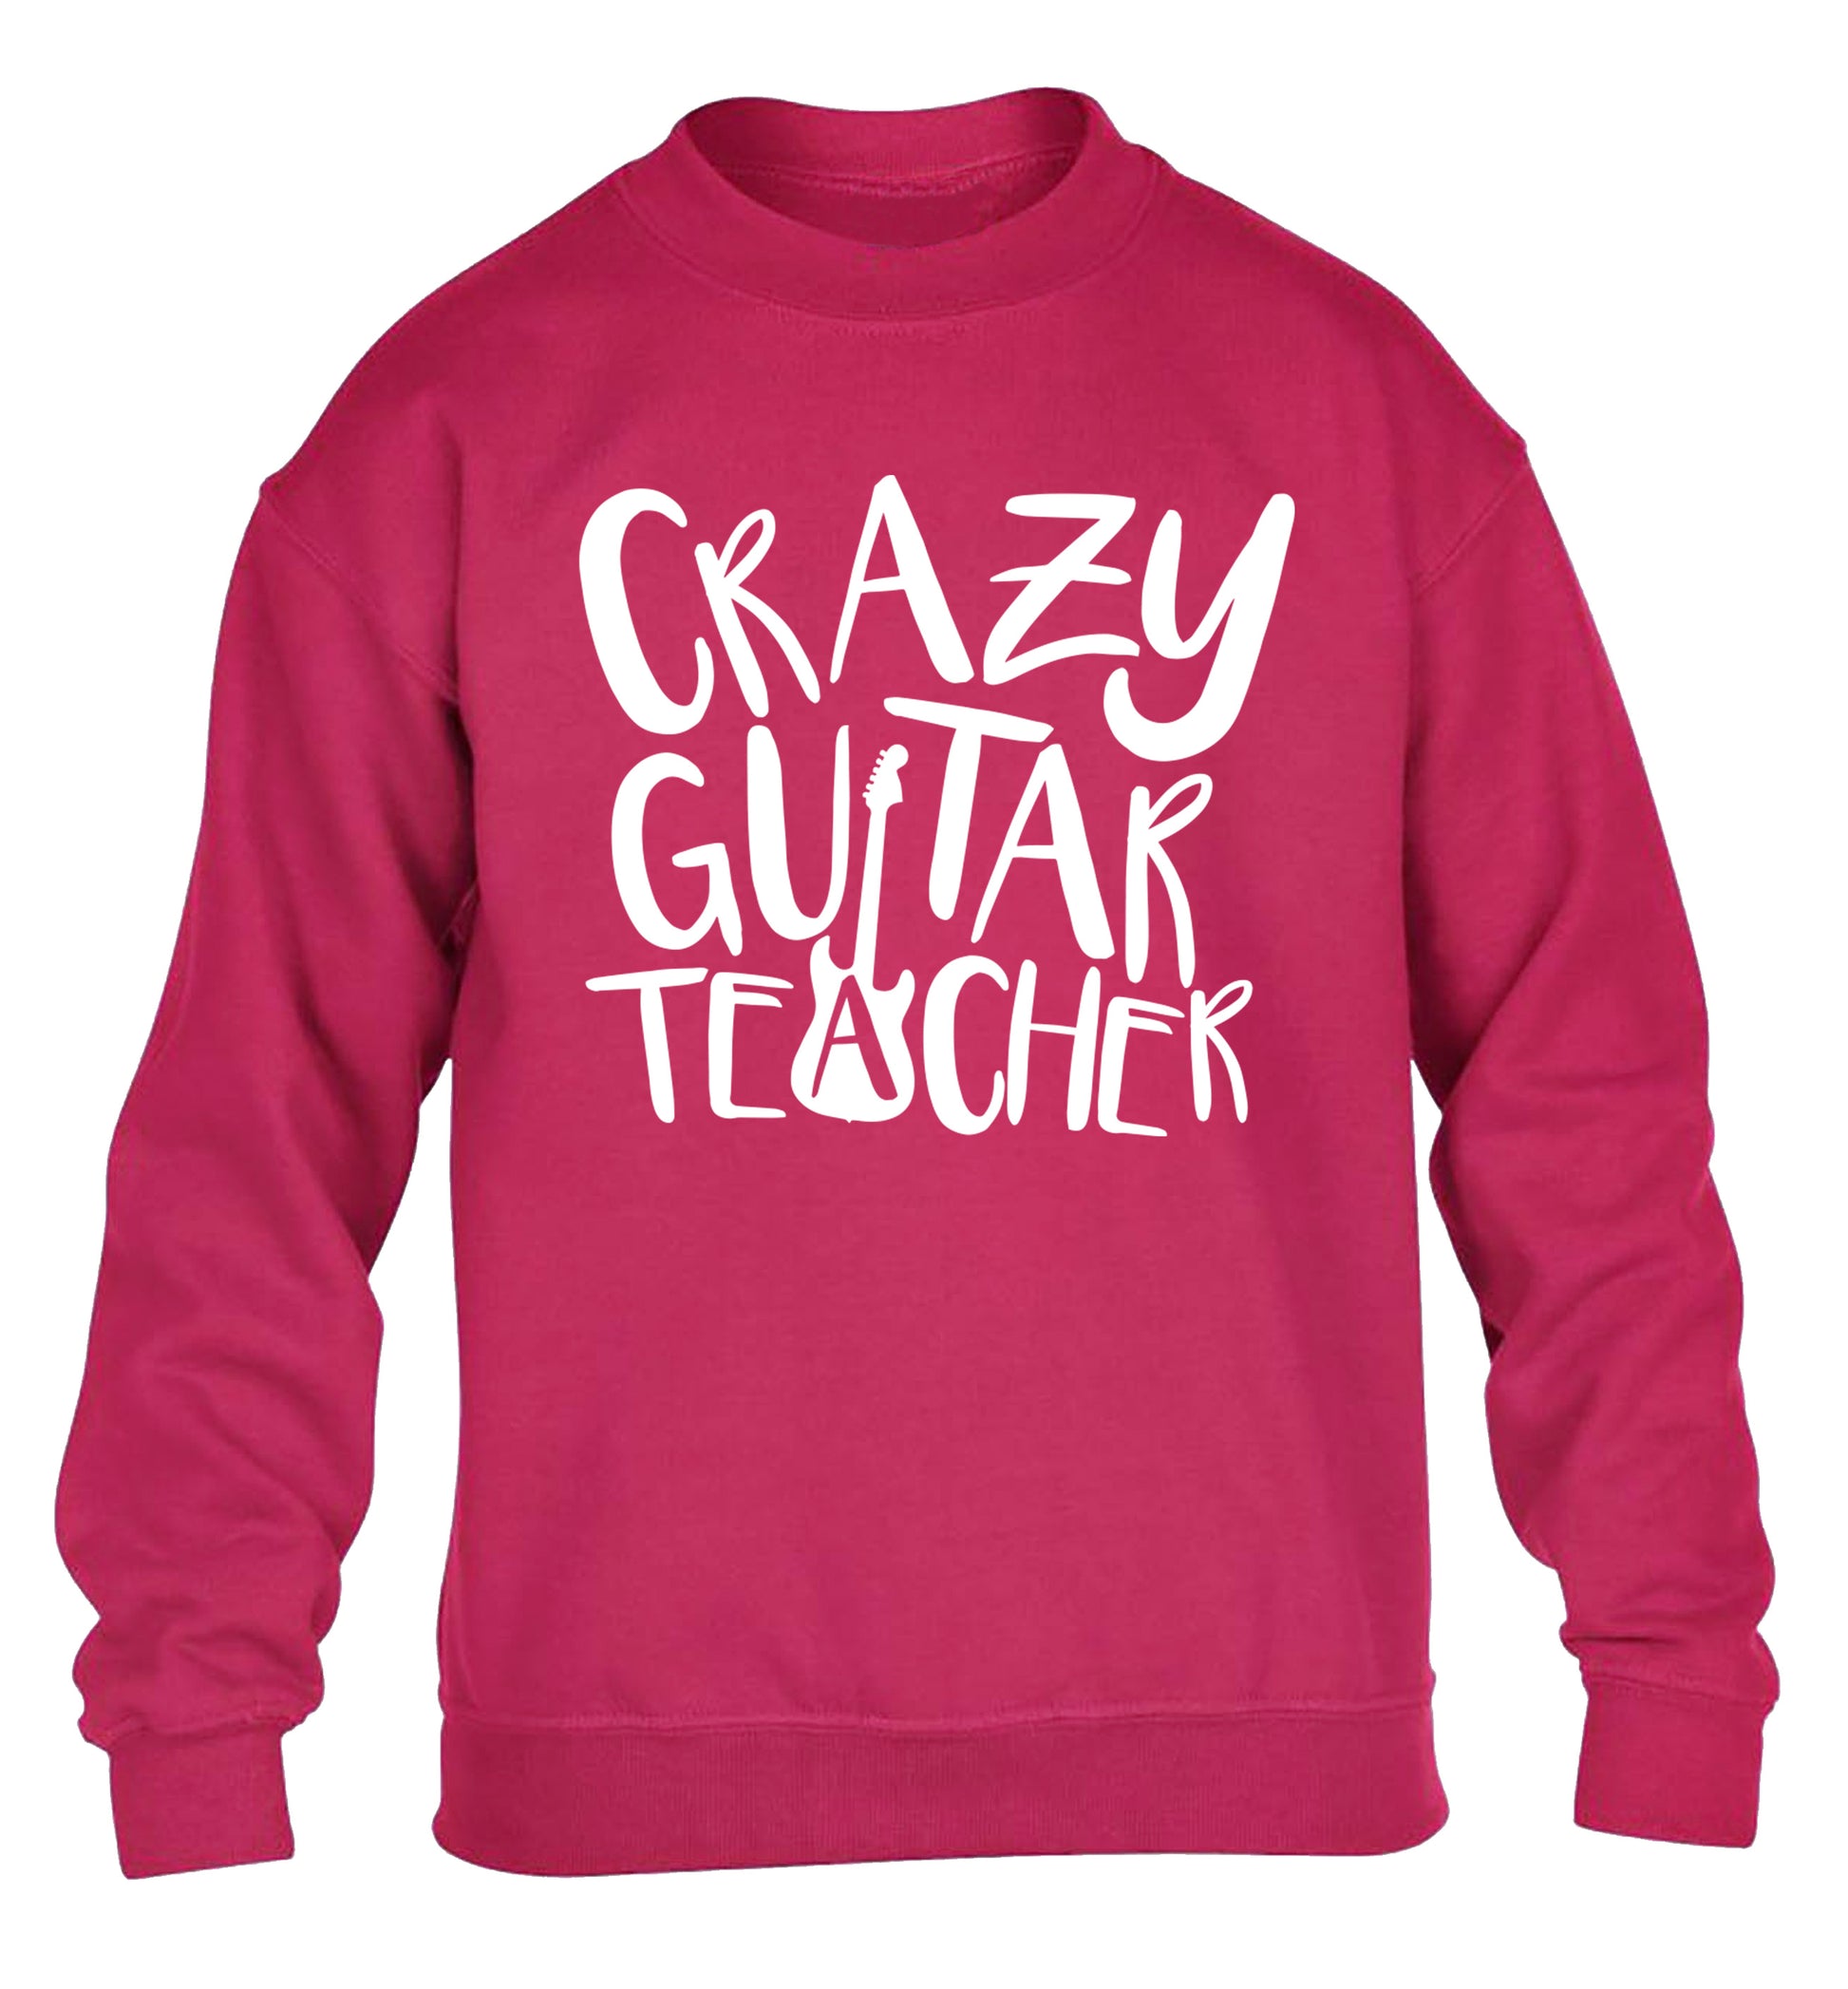 Crazy guitar teacher children's pink sweater 12-13 Years